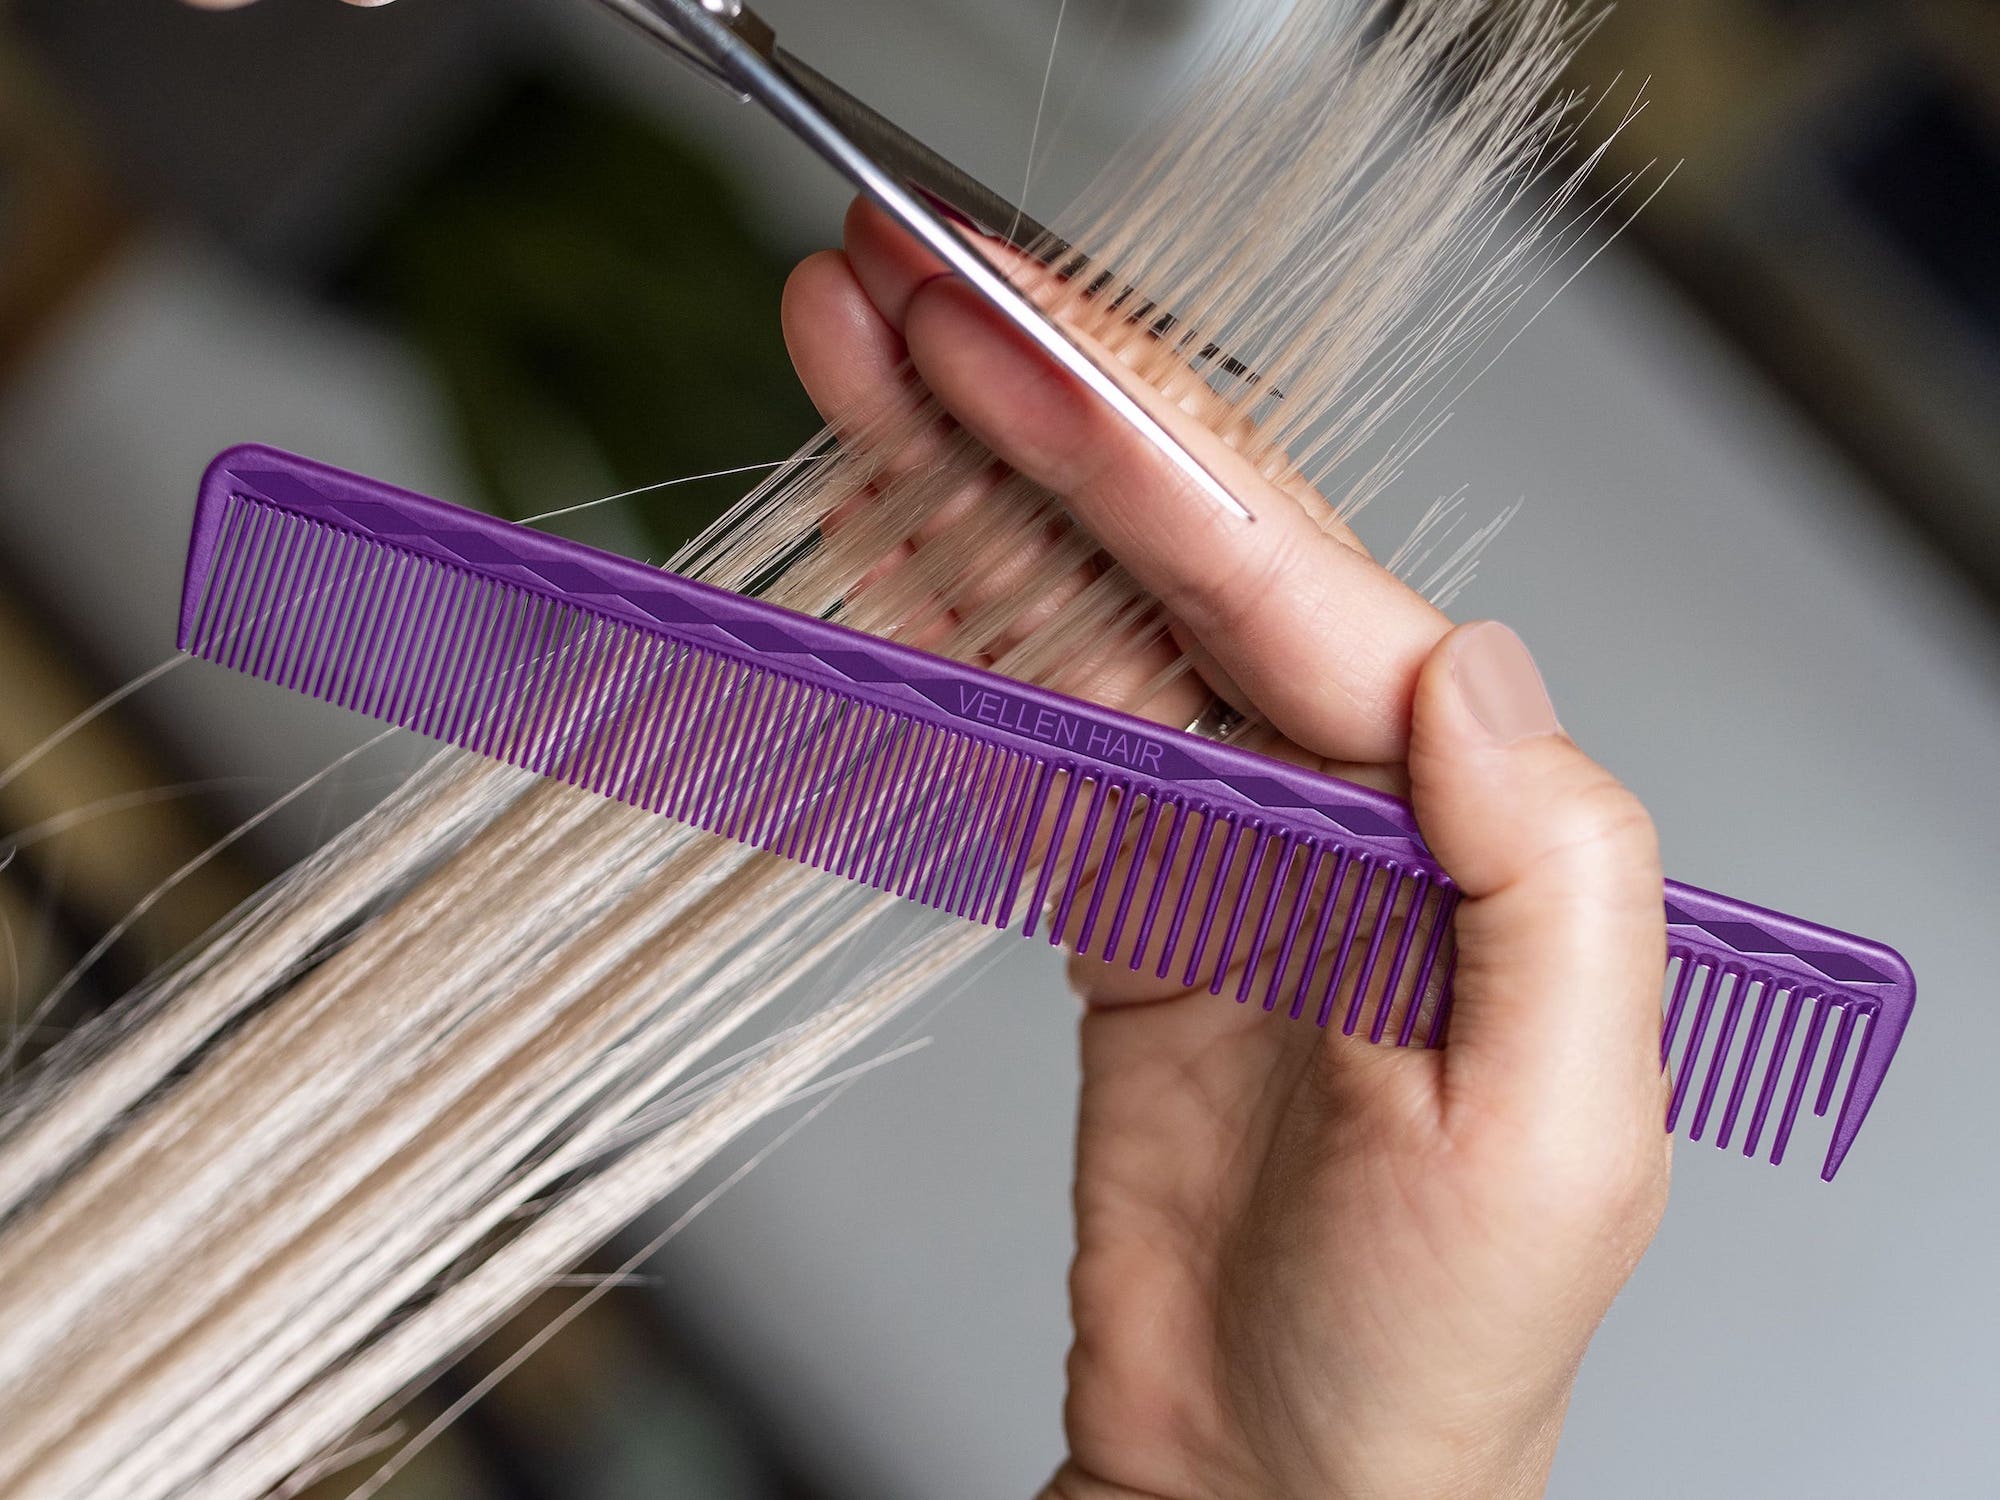 Vellen Hair® Ultimate Cutting Comb - VH202 - 17.8 cm / 7 inch - Purple